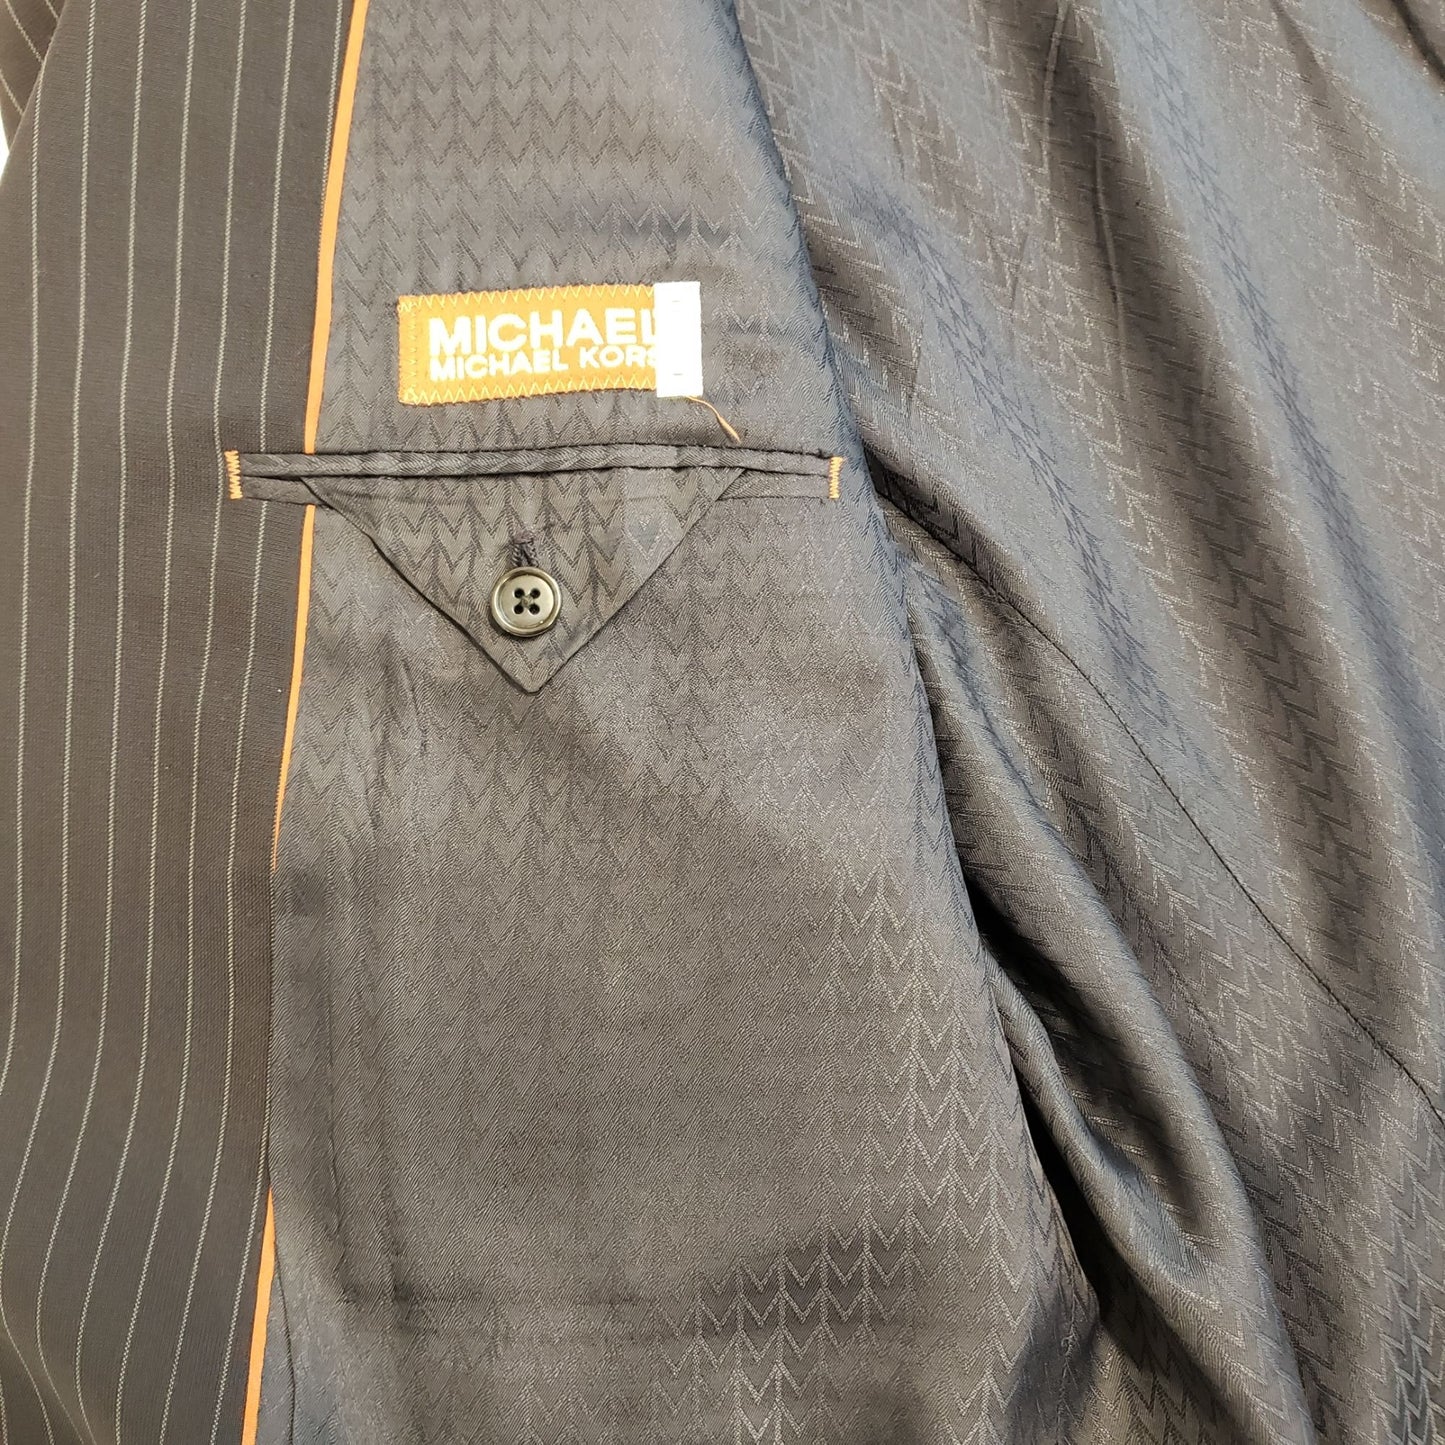 Michael Kors Navy Blue Three Button Pinstripe Suit Jacket Size 44R